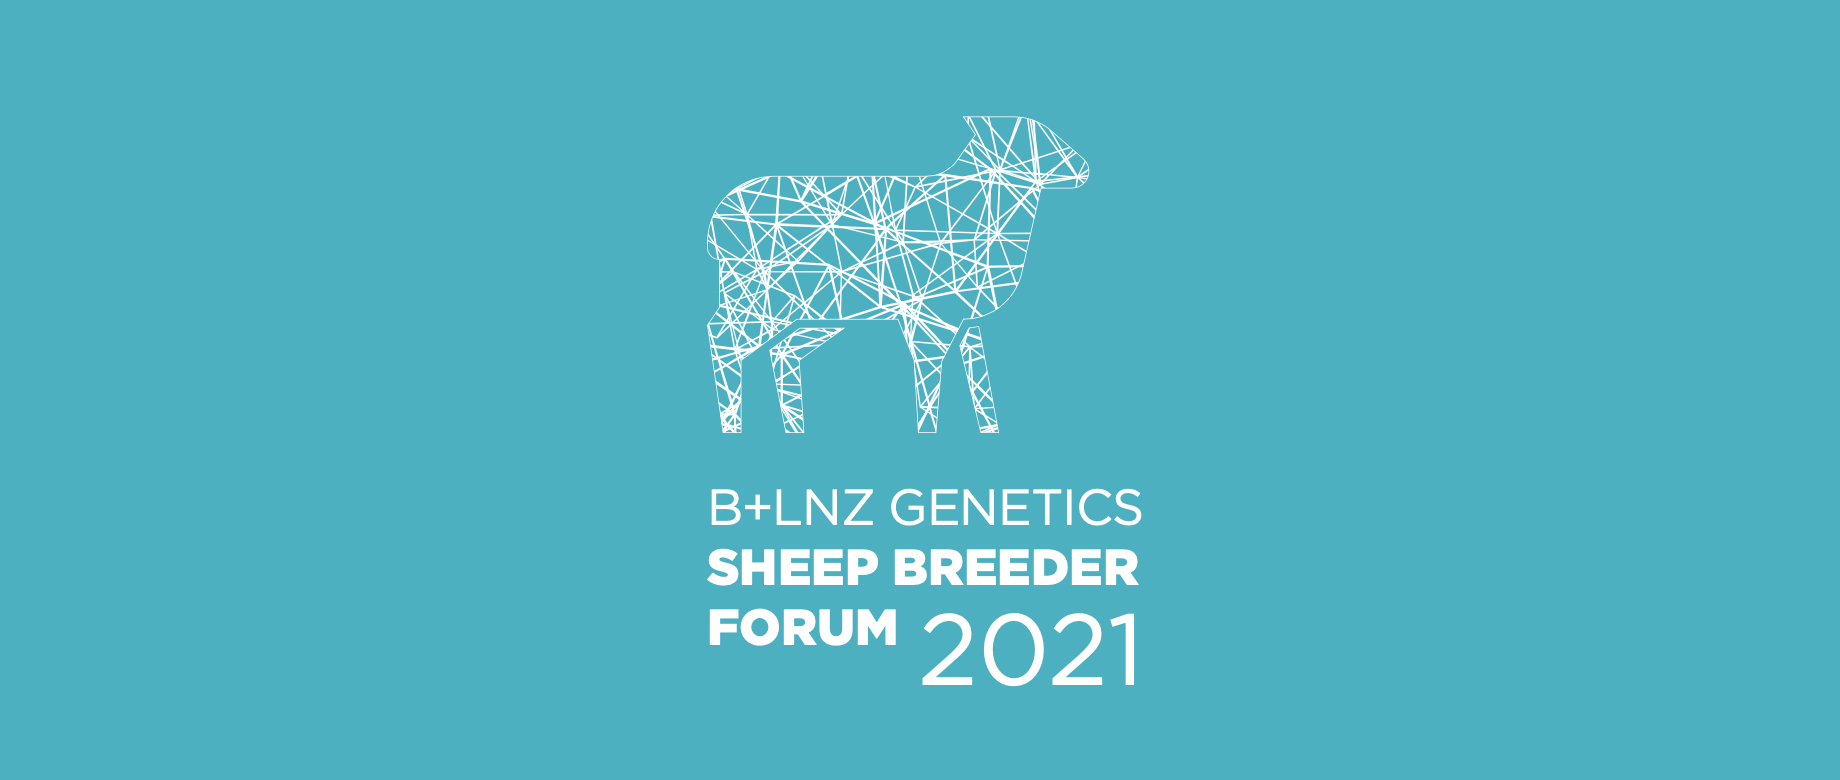 Sheep Breeder Virtual Forum 2021 